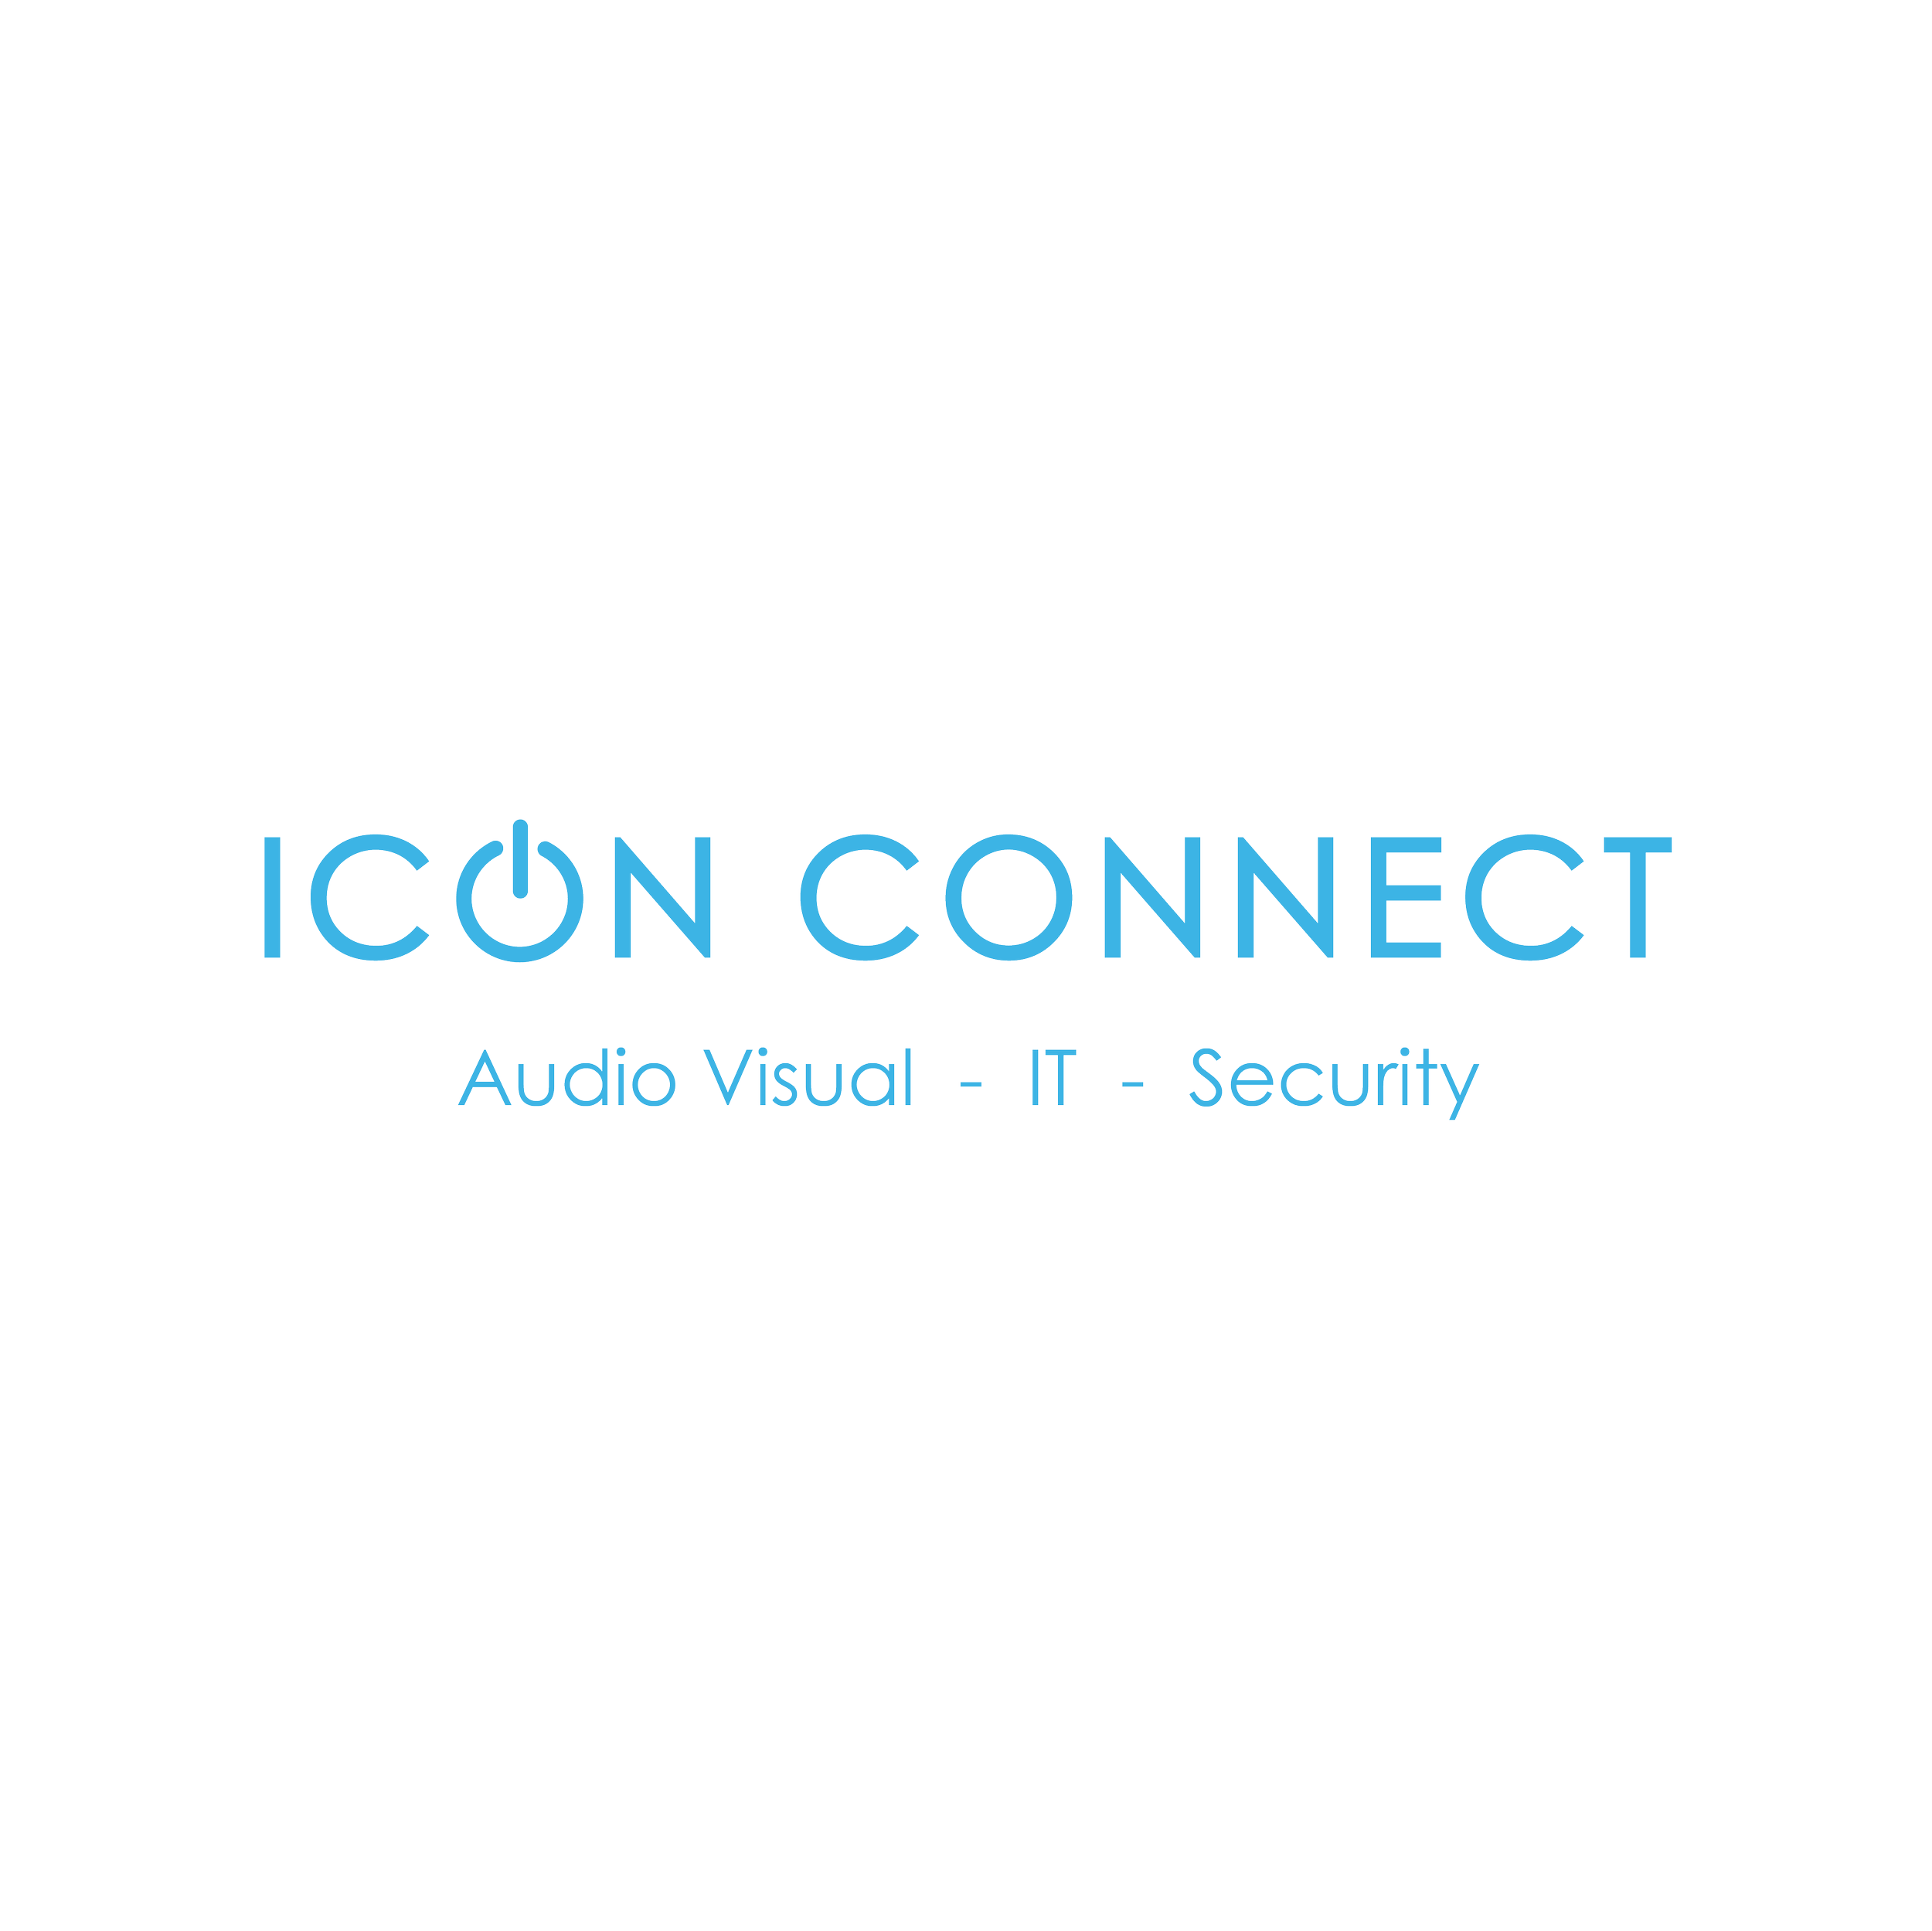 logo2023_iconconnect_av-it-sec_blue-1.png